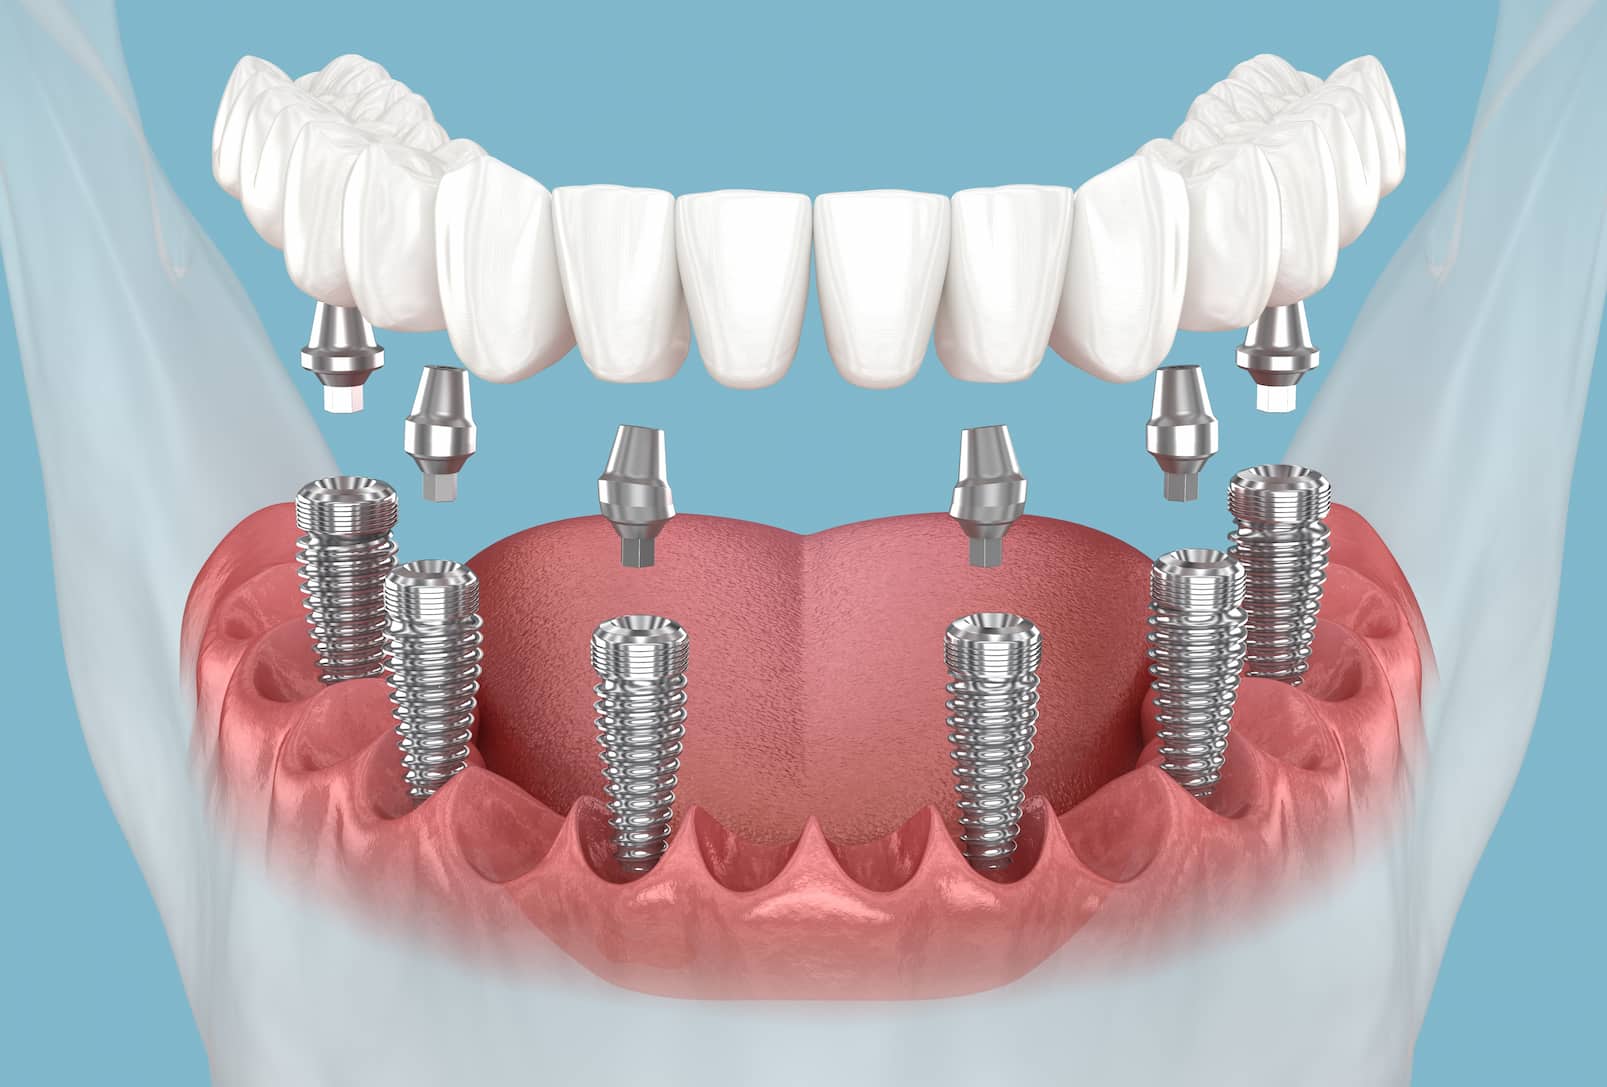 Todo en 6 implantes dentales turqua